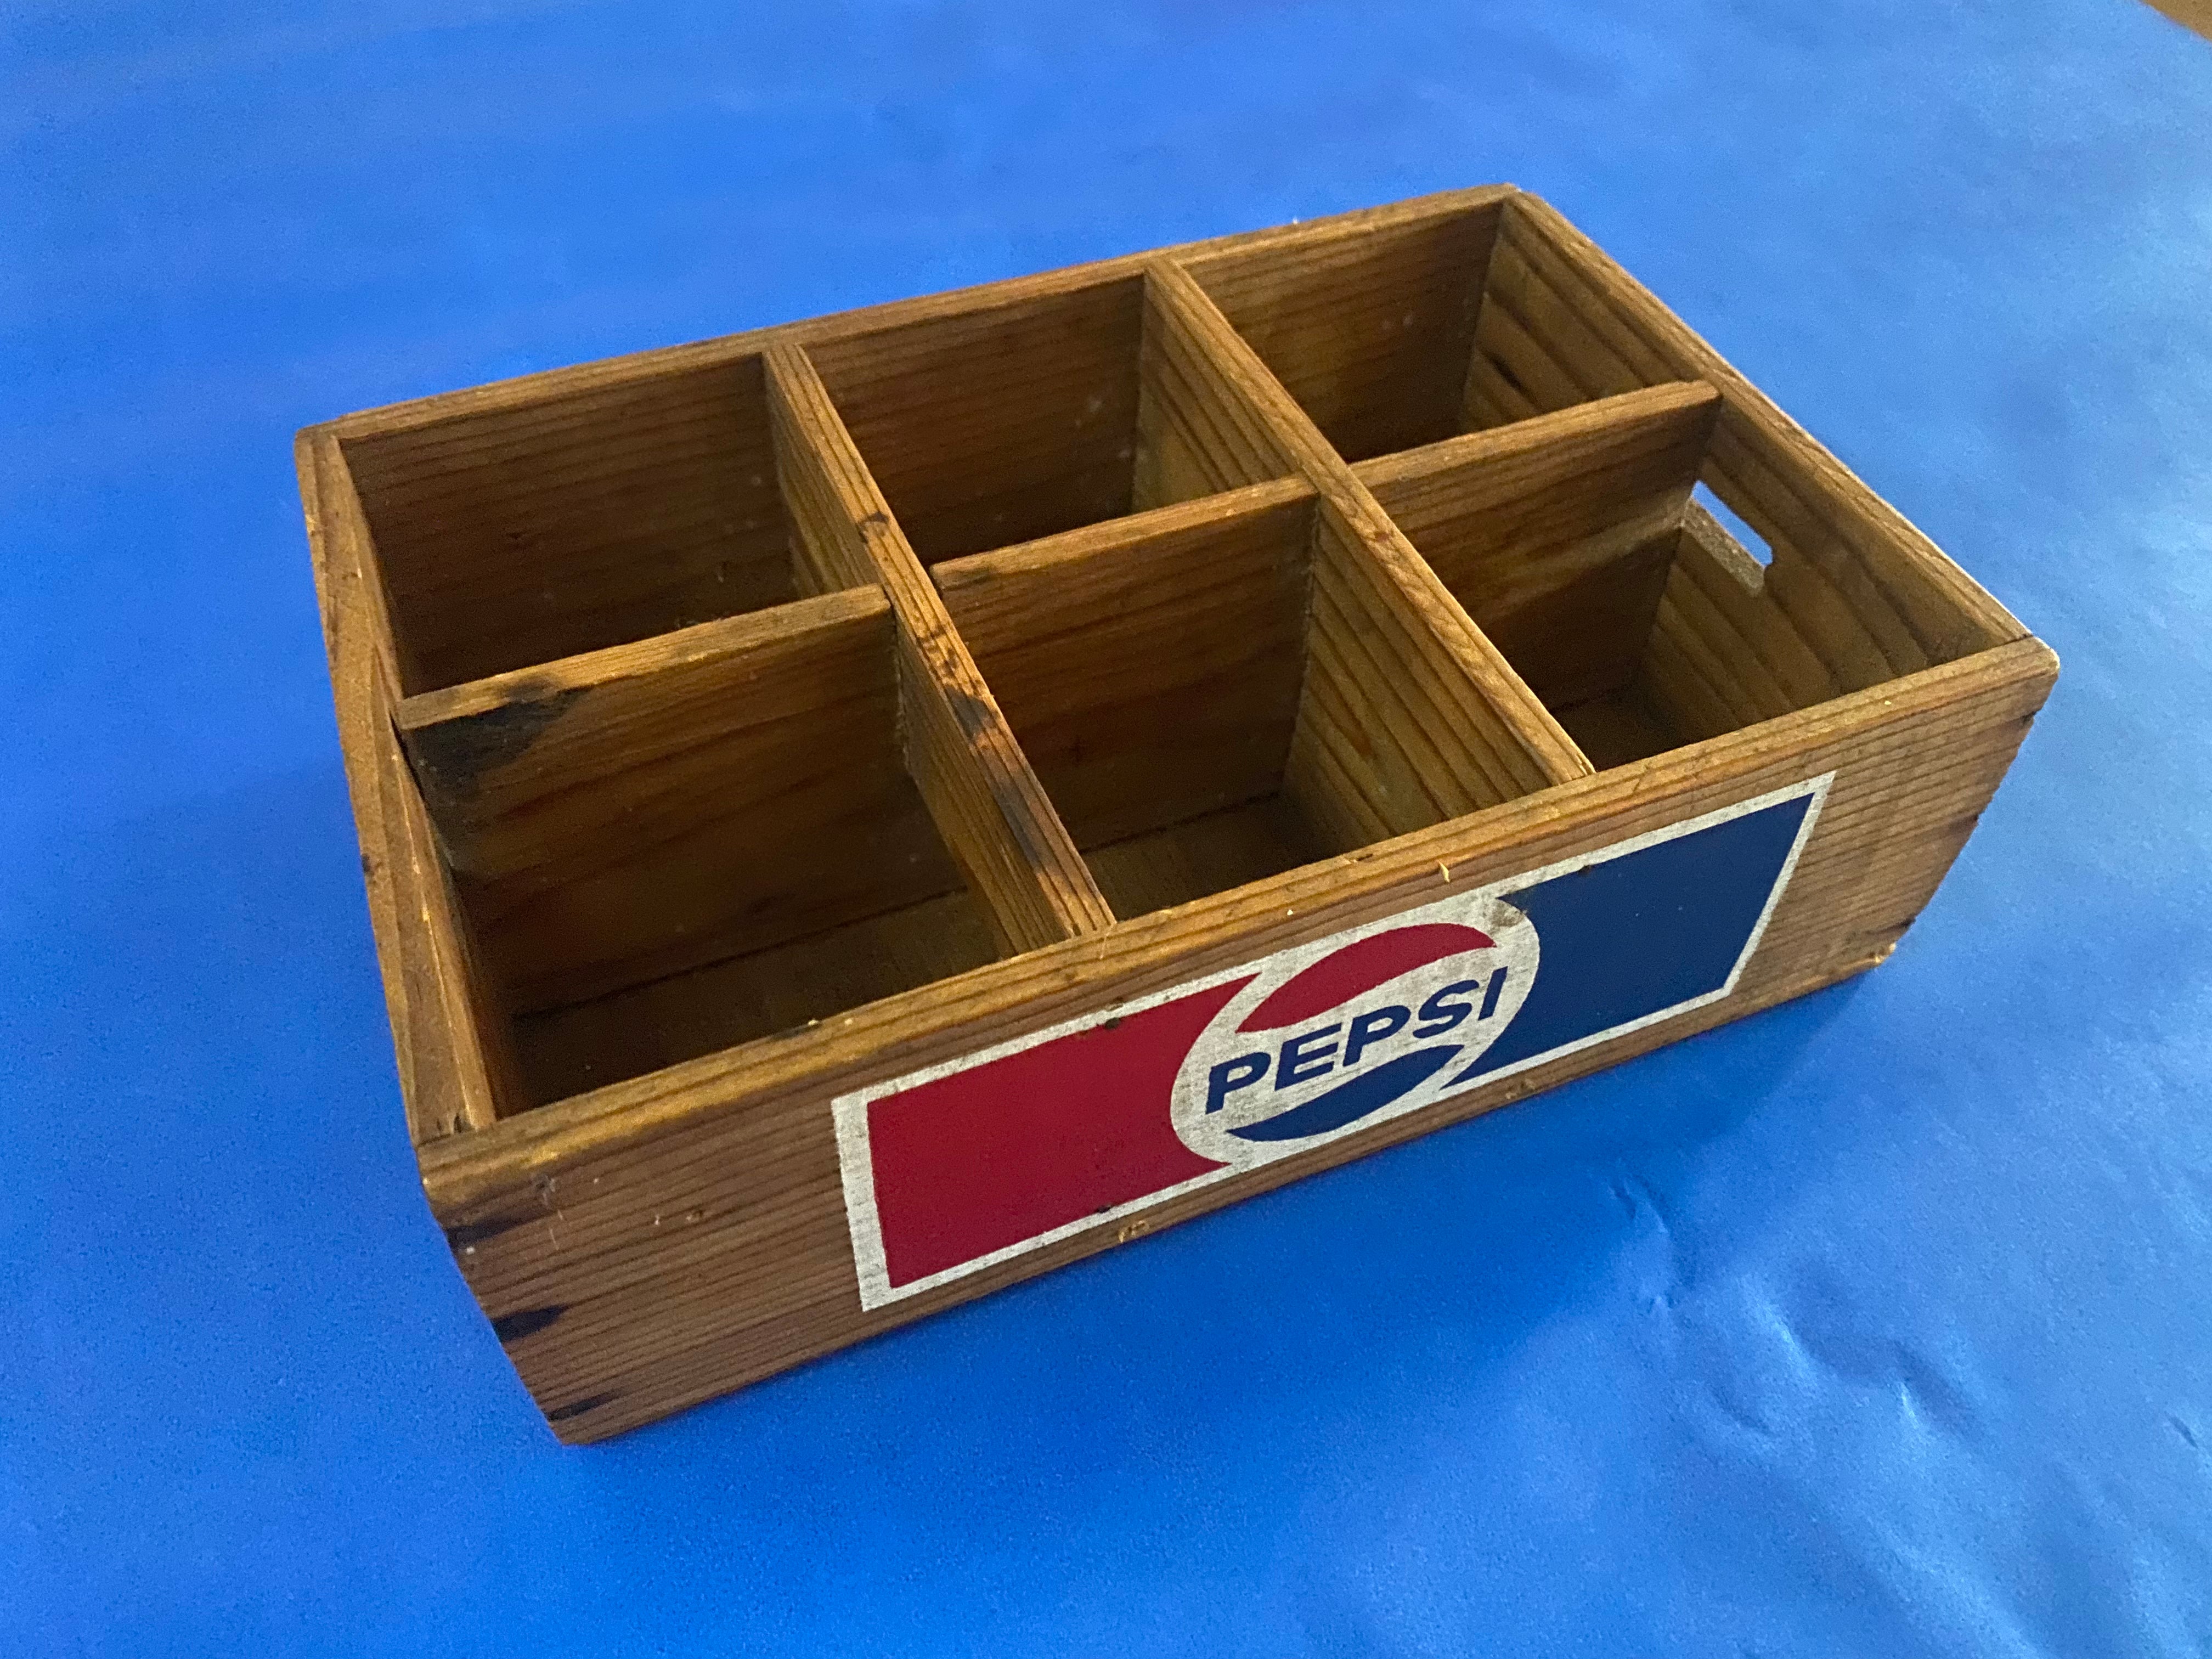 Vintage 1970s Wood Pepsi Cola delivery’s box.